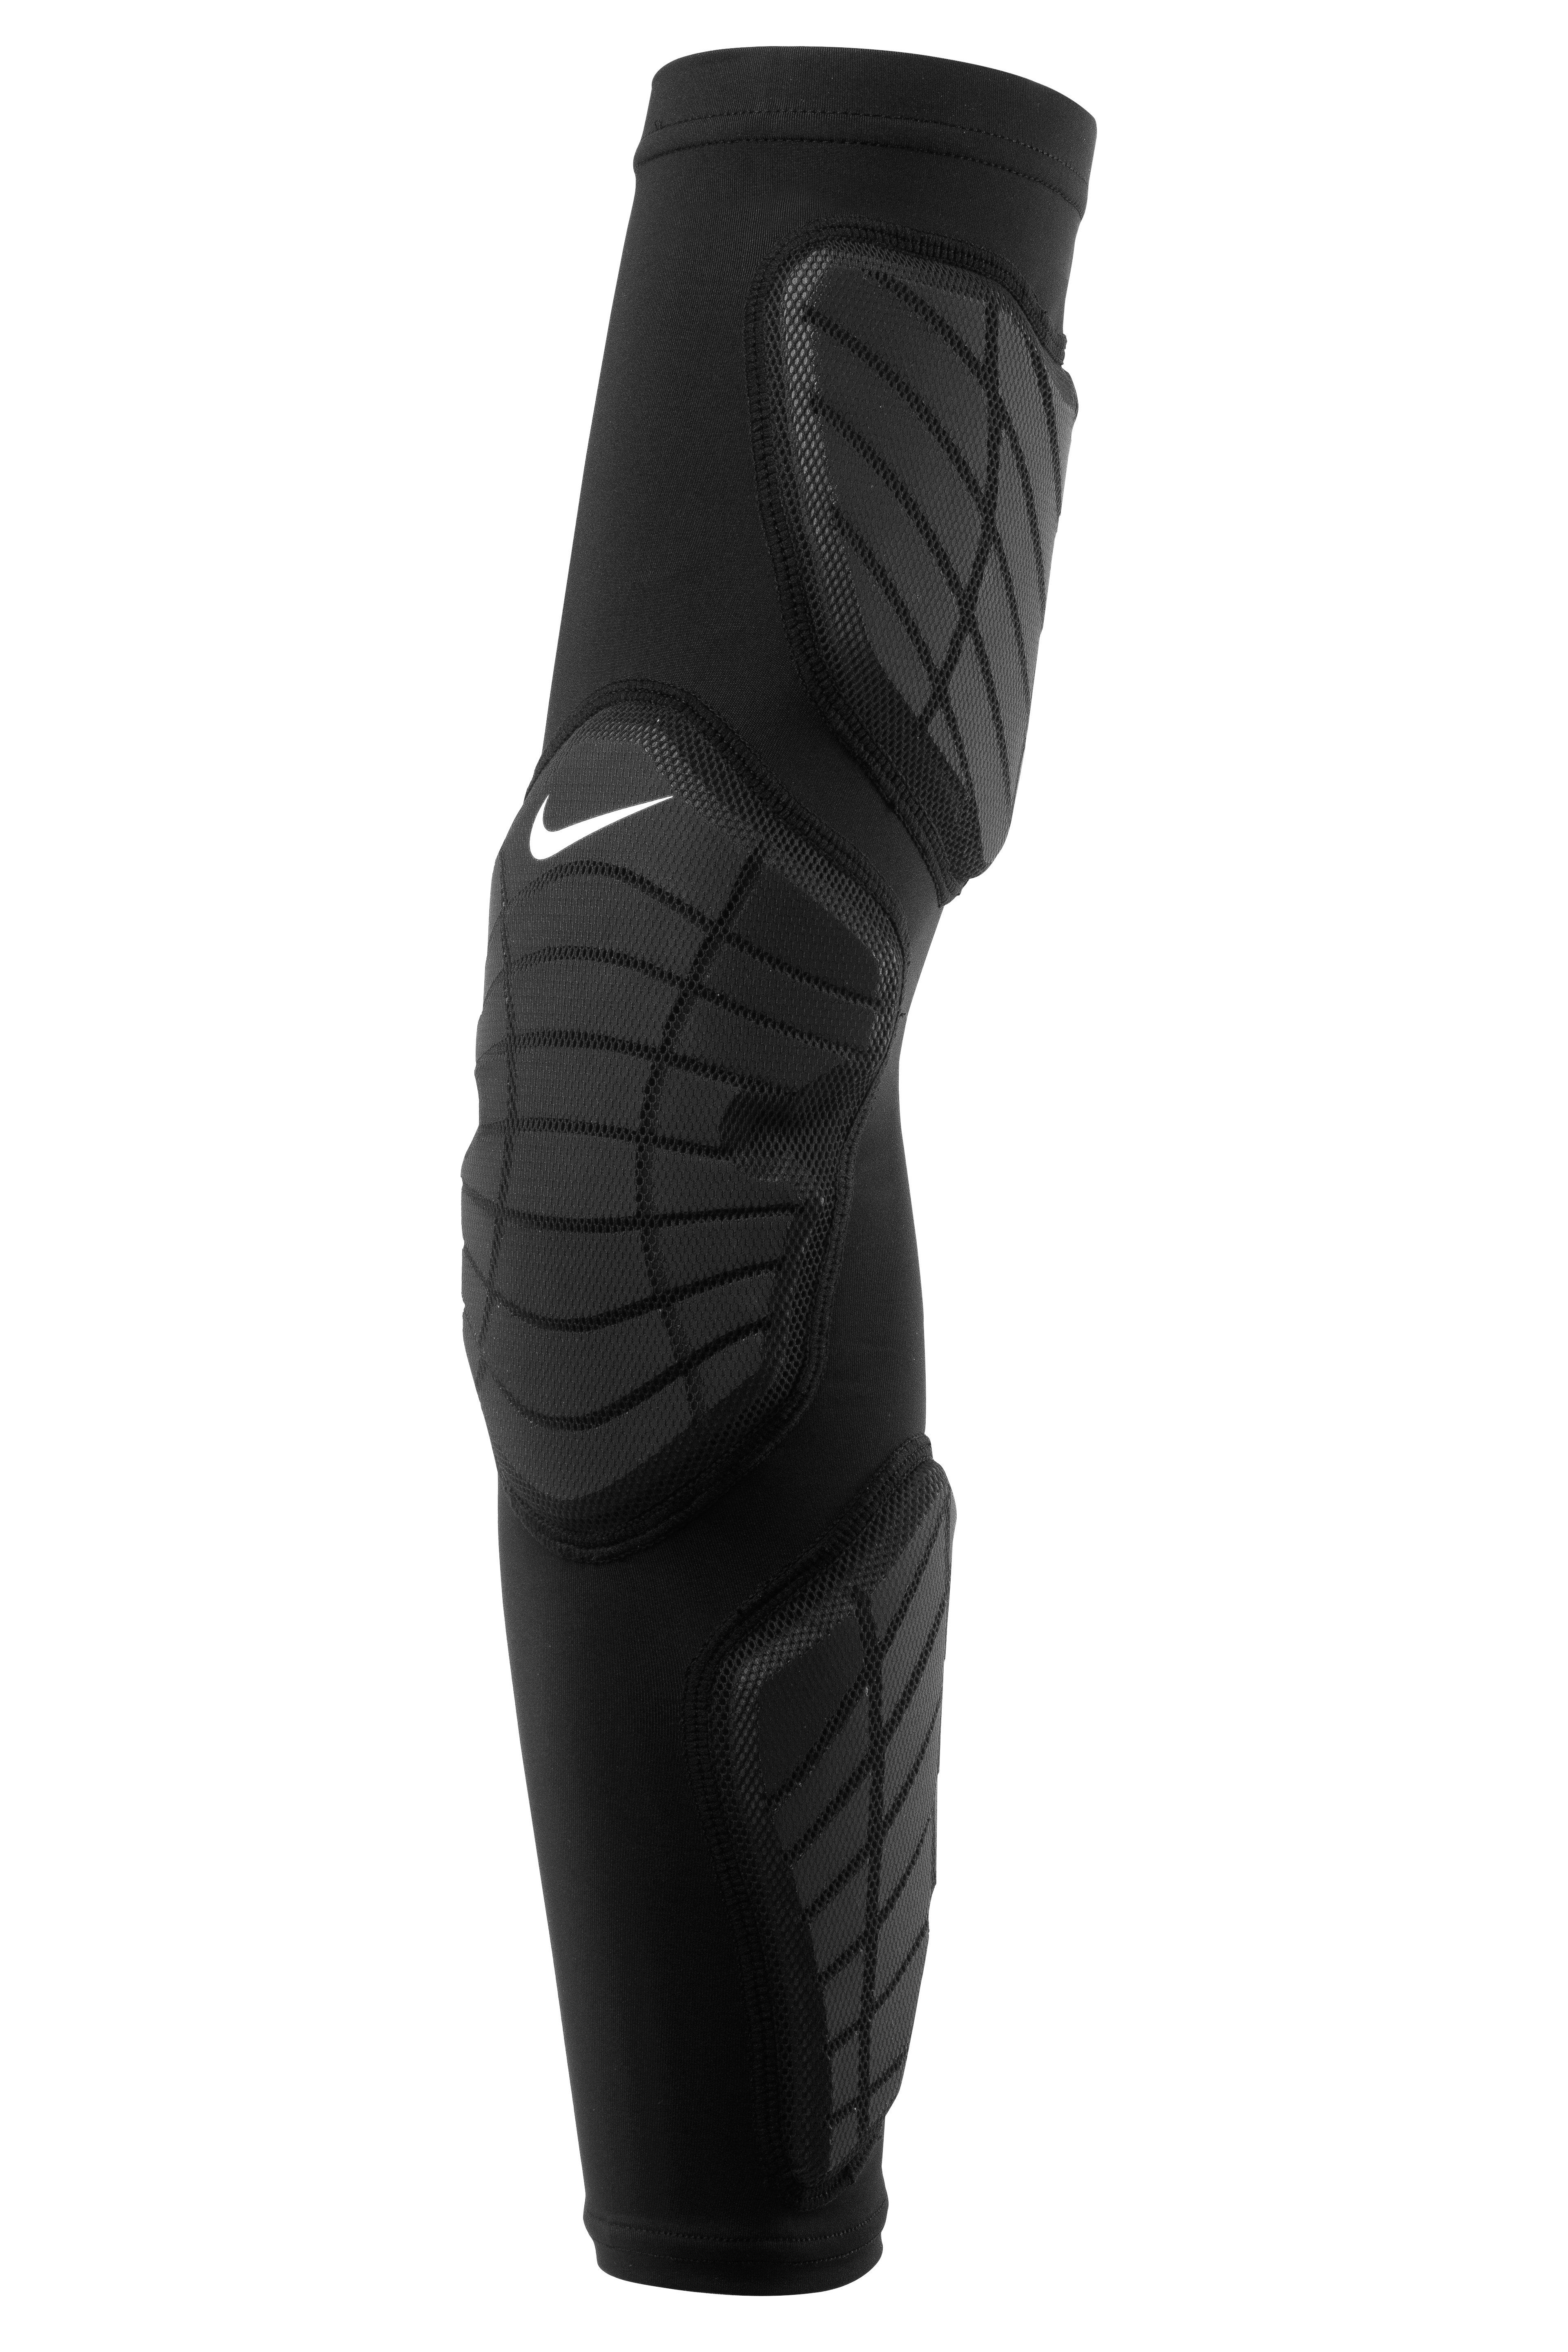 bespotten condensor Konijn Nike Pro Adult Hyperstrong Padded Football Arm Sleeve 3.0- Left